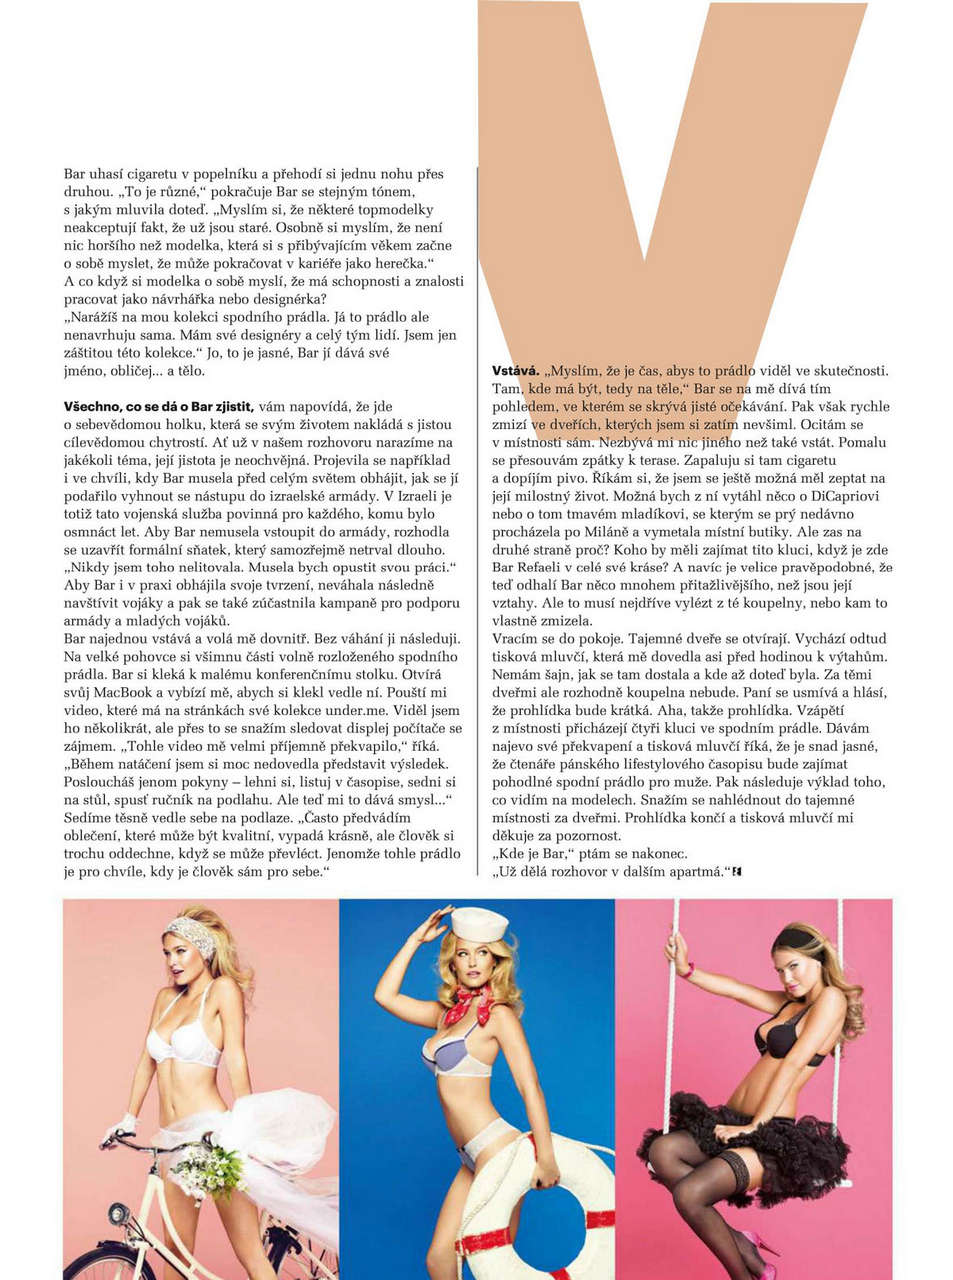 Bar Refaeli Esquire Magazine Czech Republic June 2012 Issue